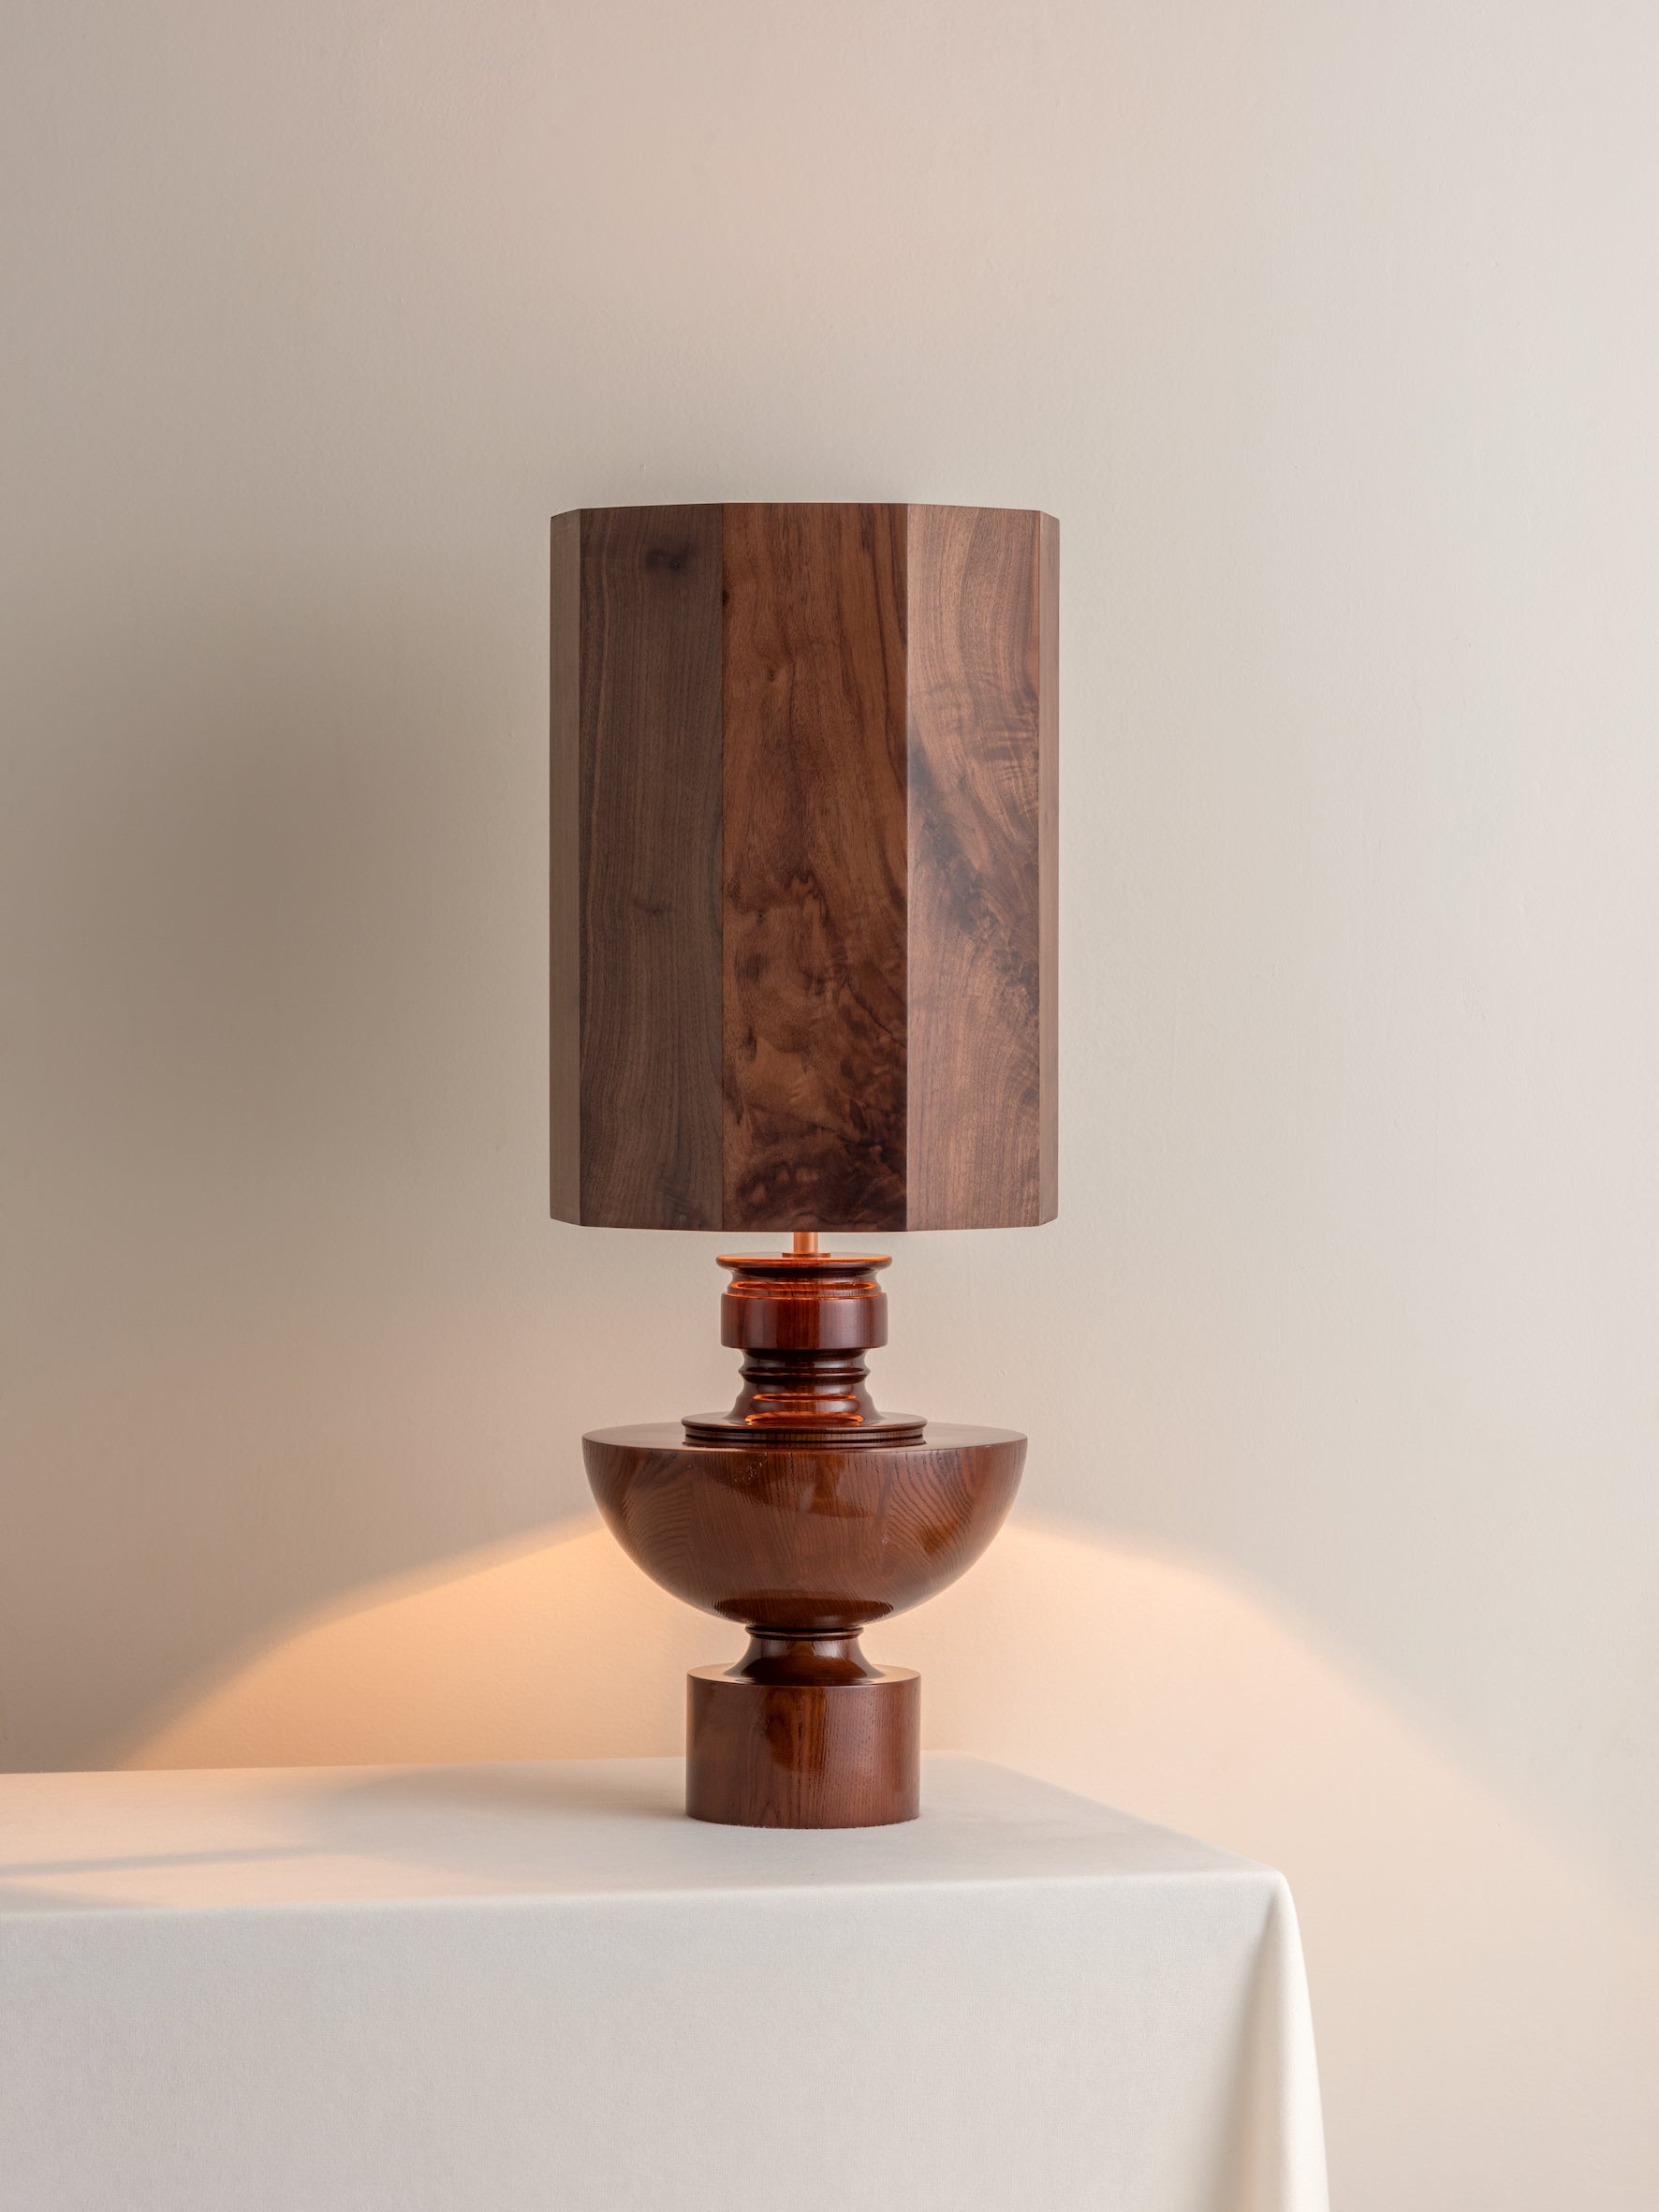 Editions spun wood lamp with + walnut wood shade | Table Lamp | Lights & Lamps Inc | Modern Affordable Designer Lighting | USA